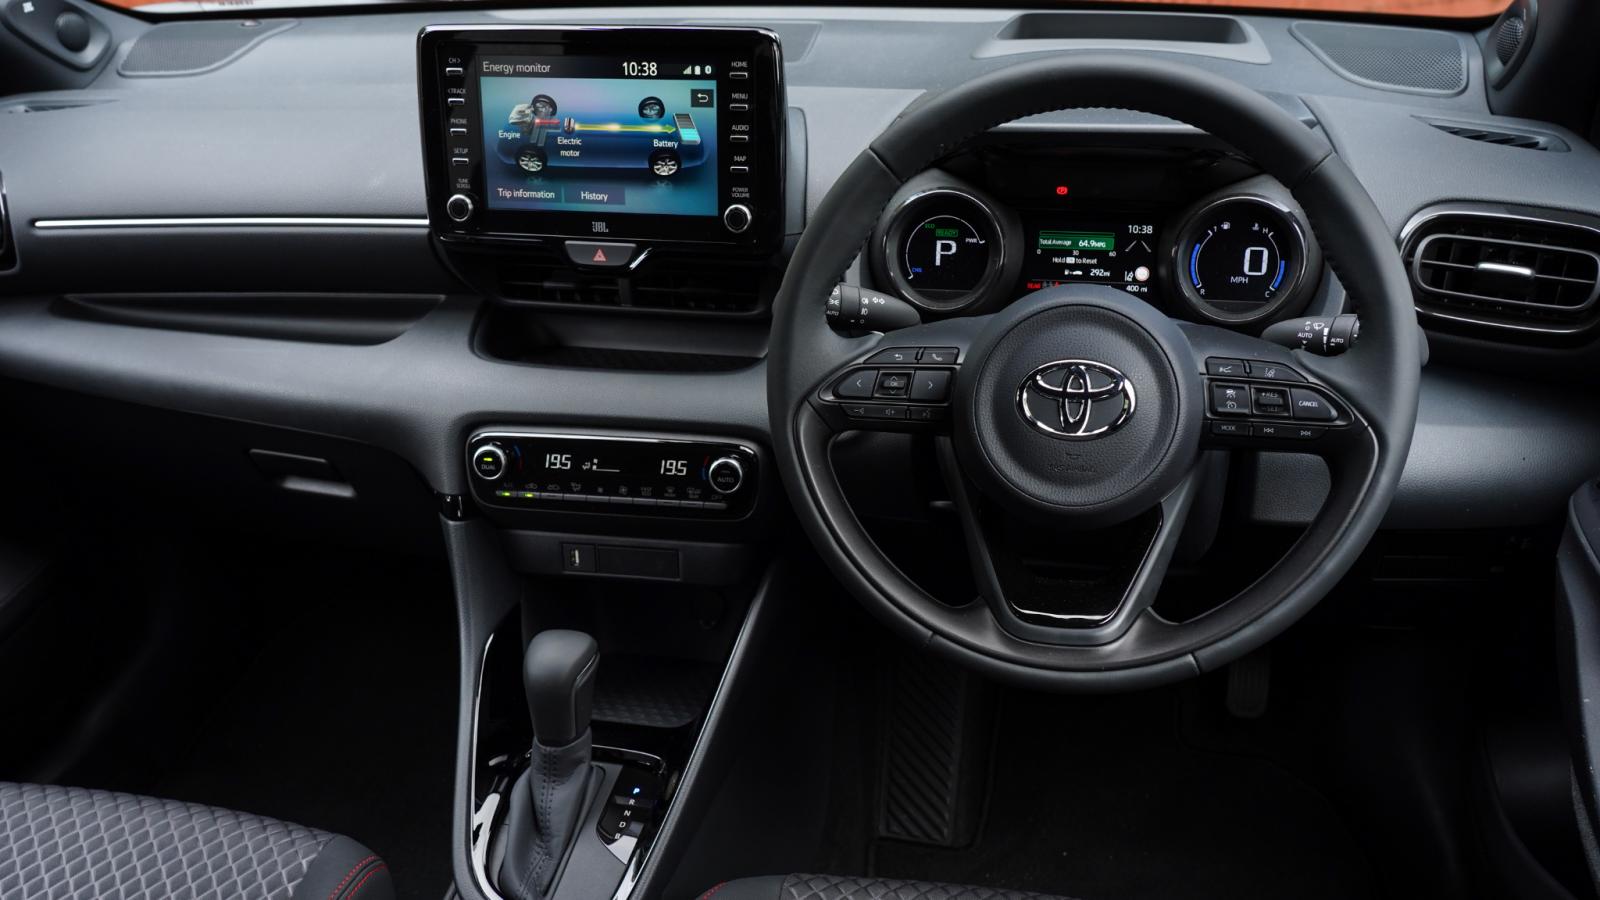 Toyota Yaris's interior